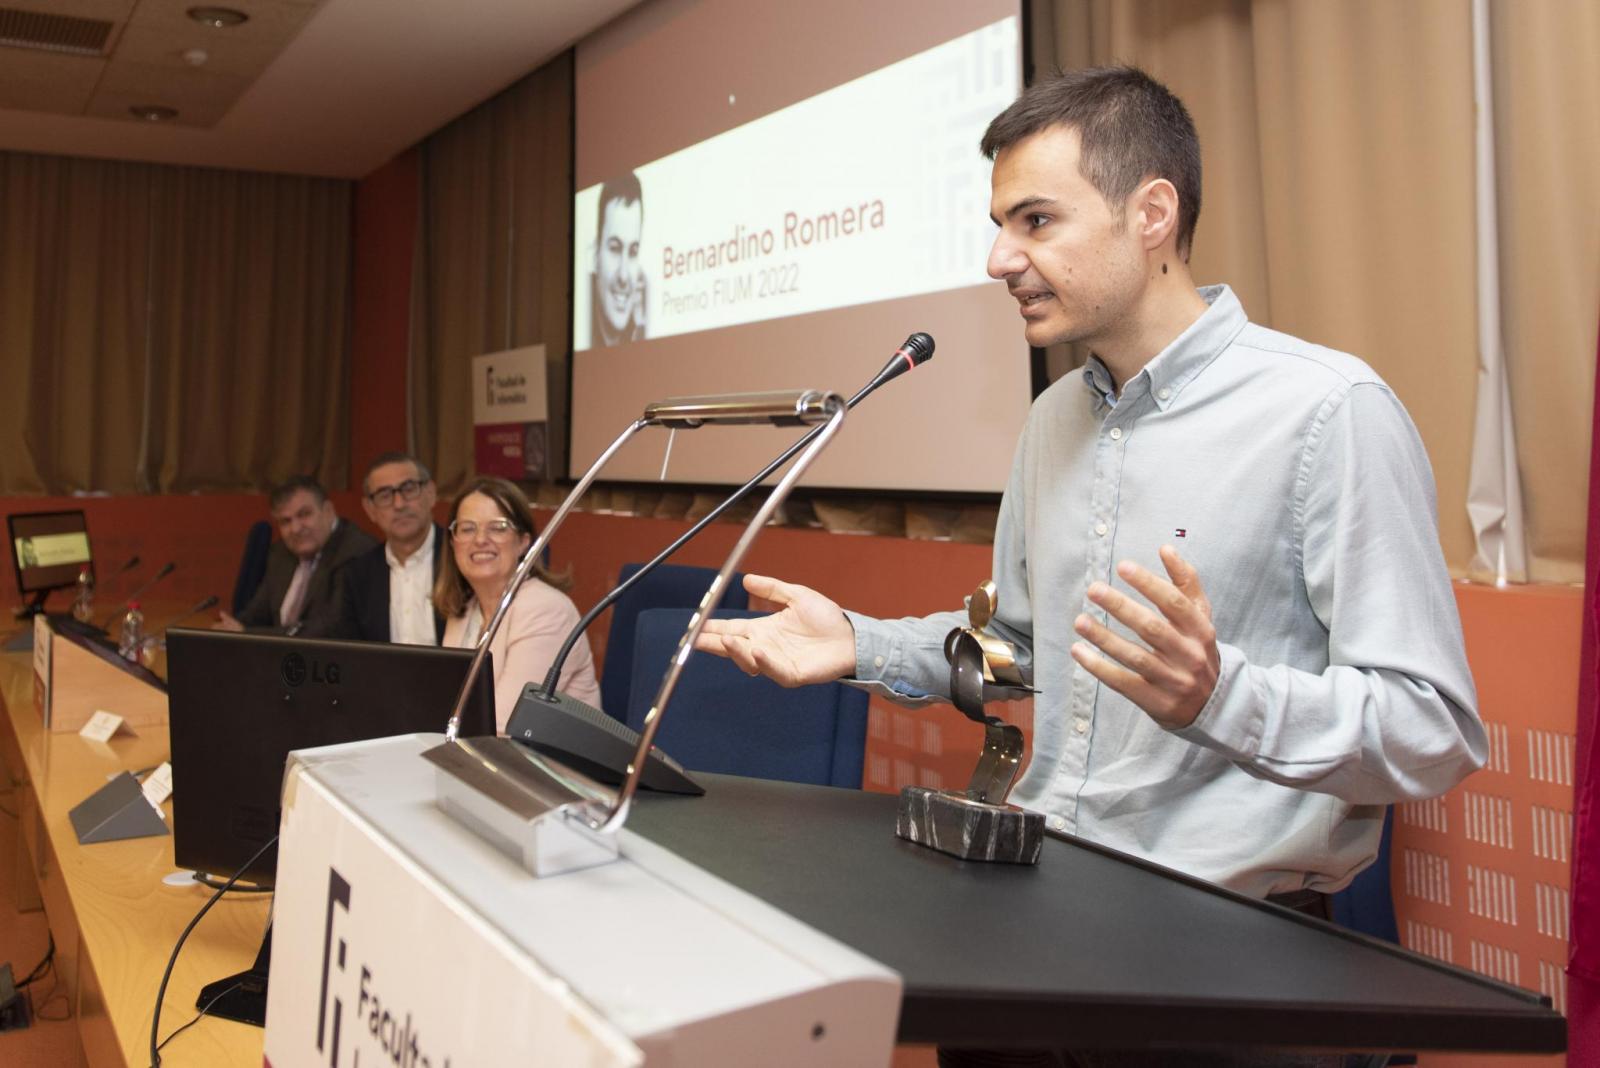 Premio FIUM a Bernardino Romera, especialista en IA